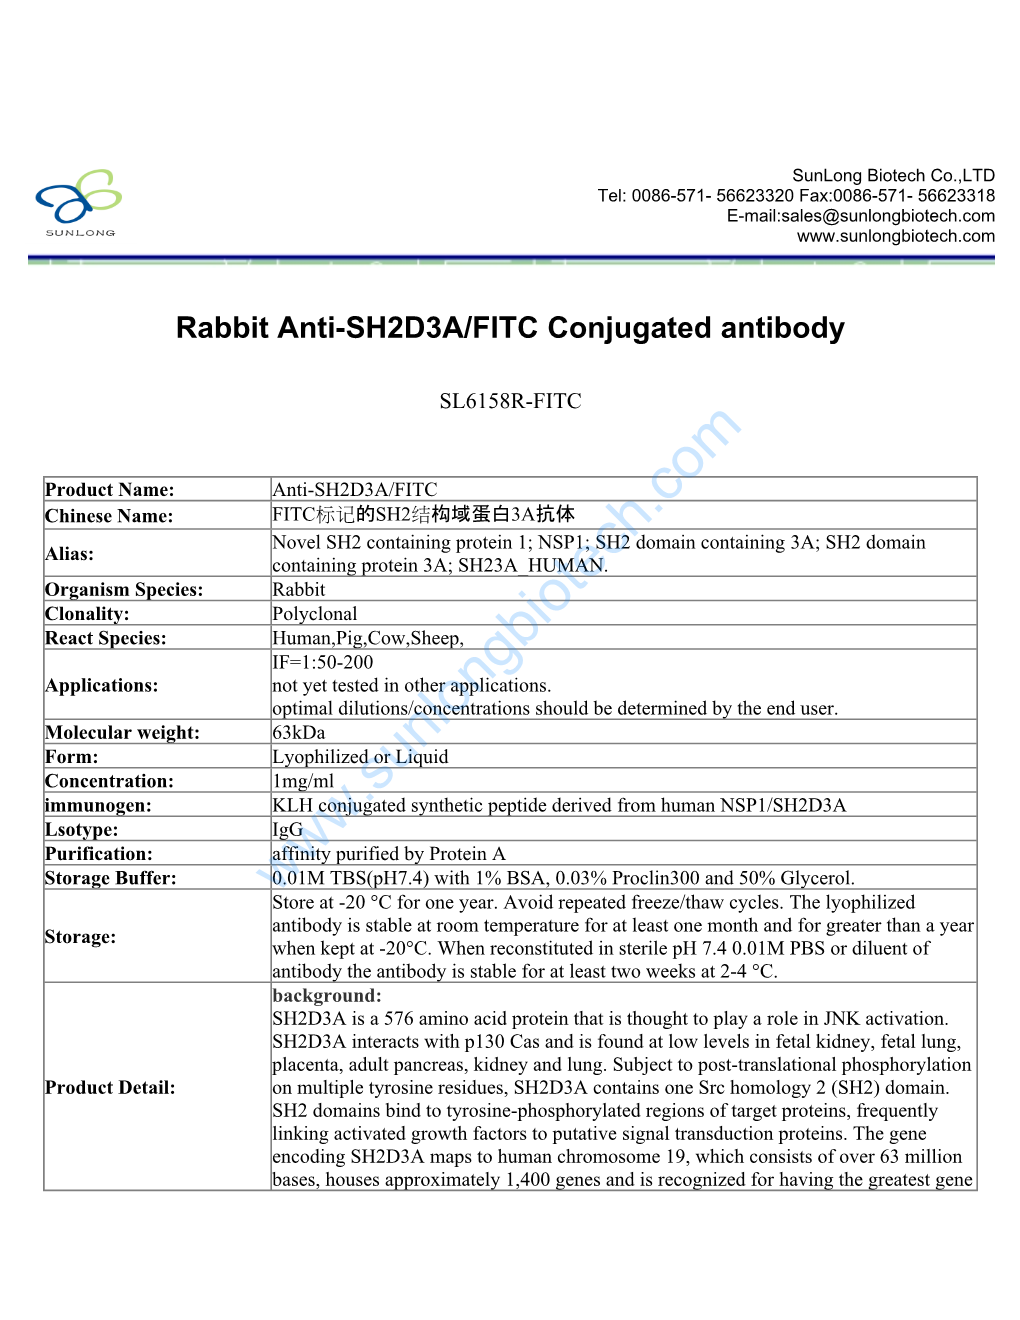 Rabbit Anti-SH2D3A/FITC Conjugated Antibody